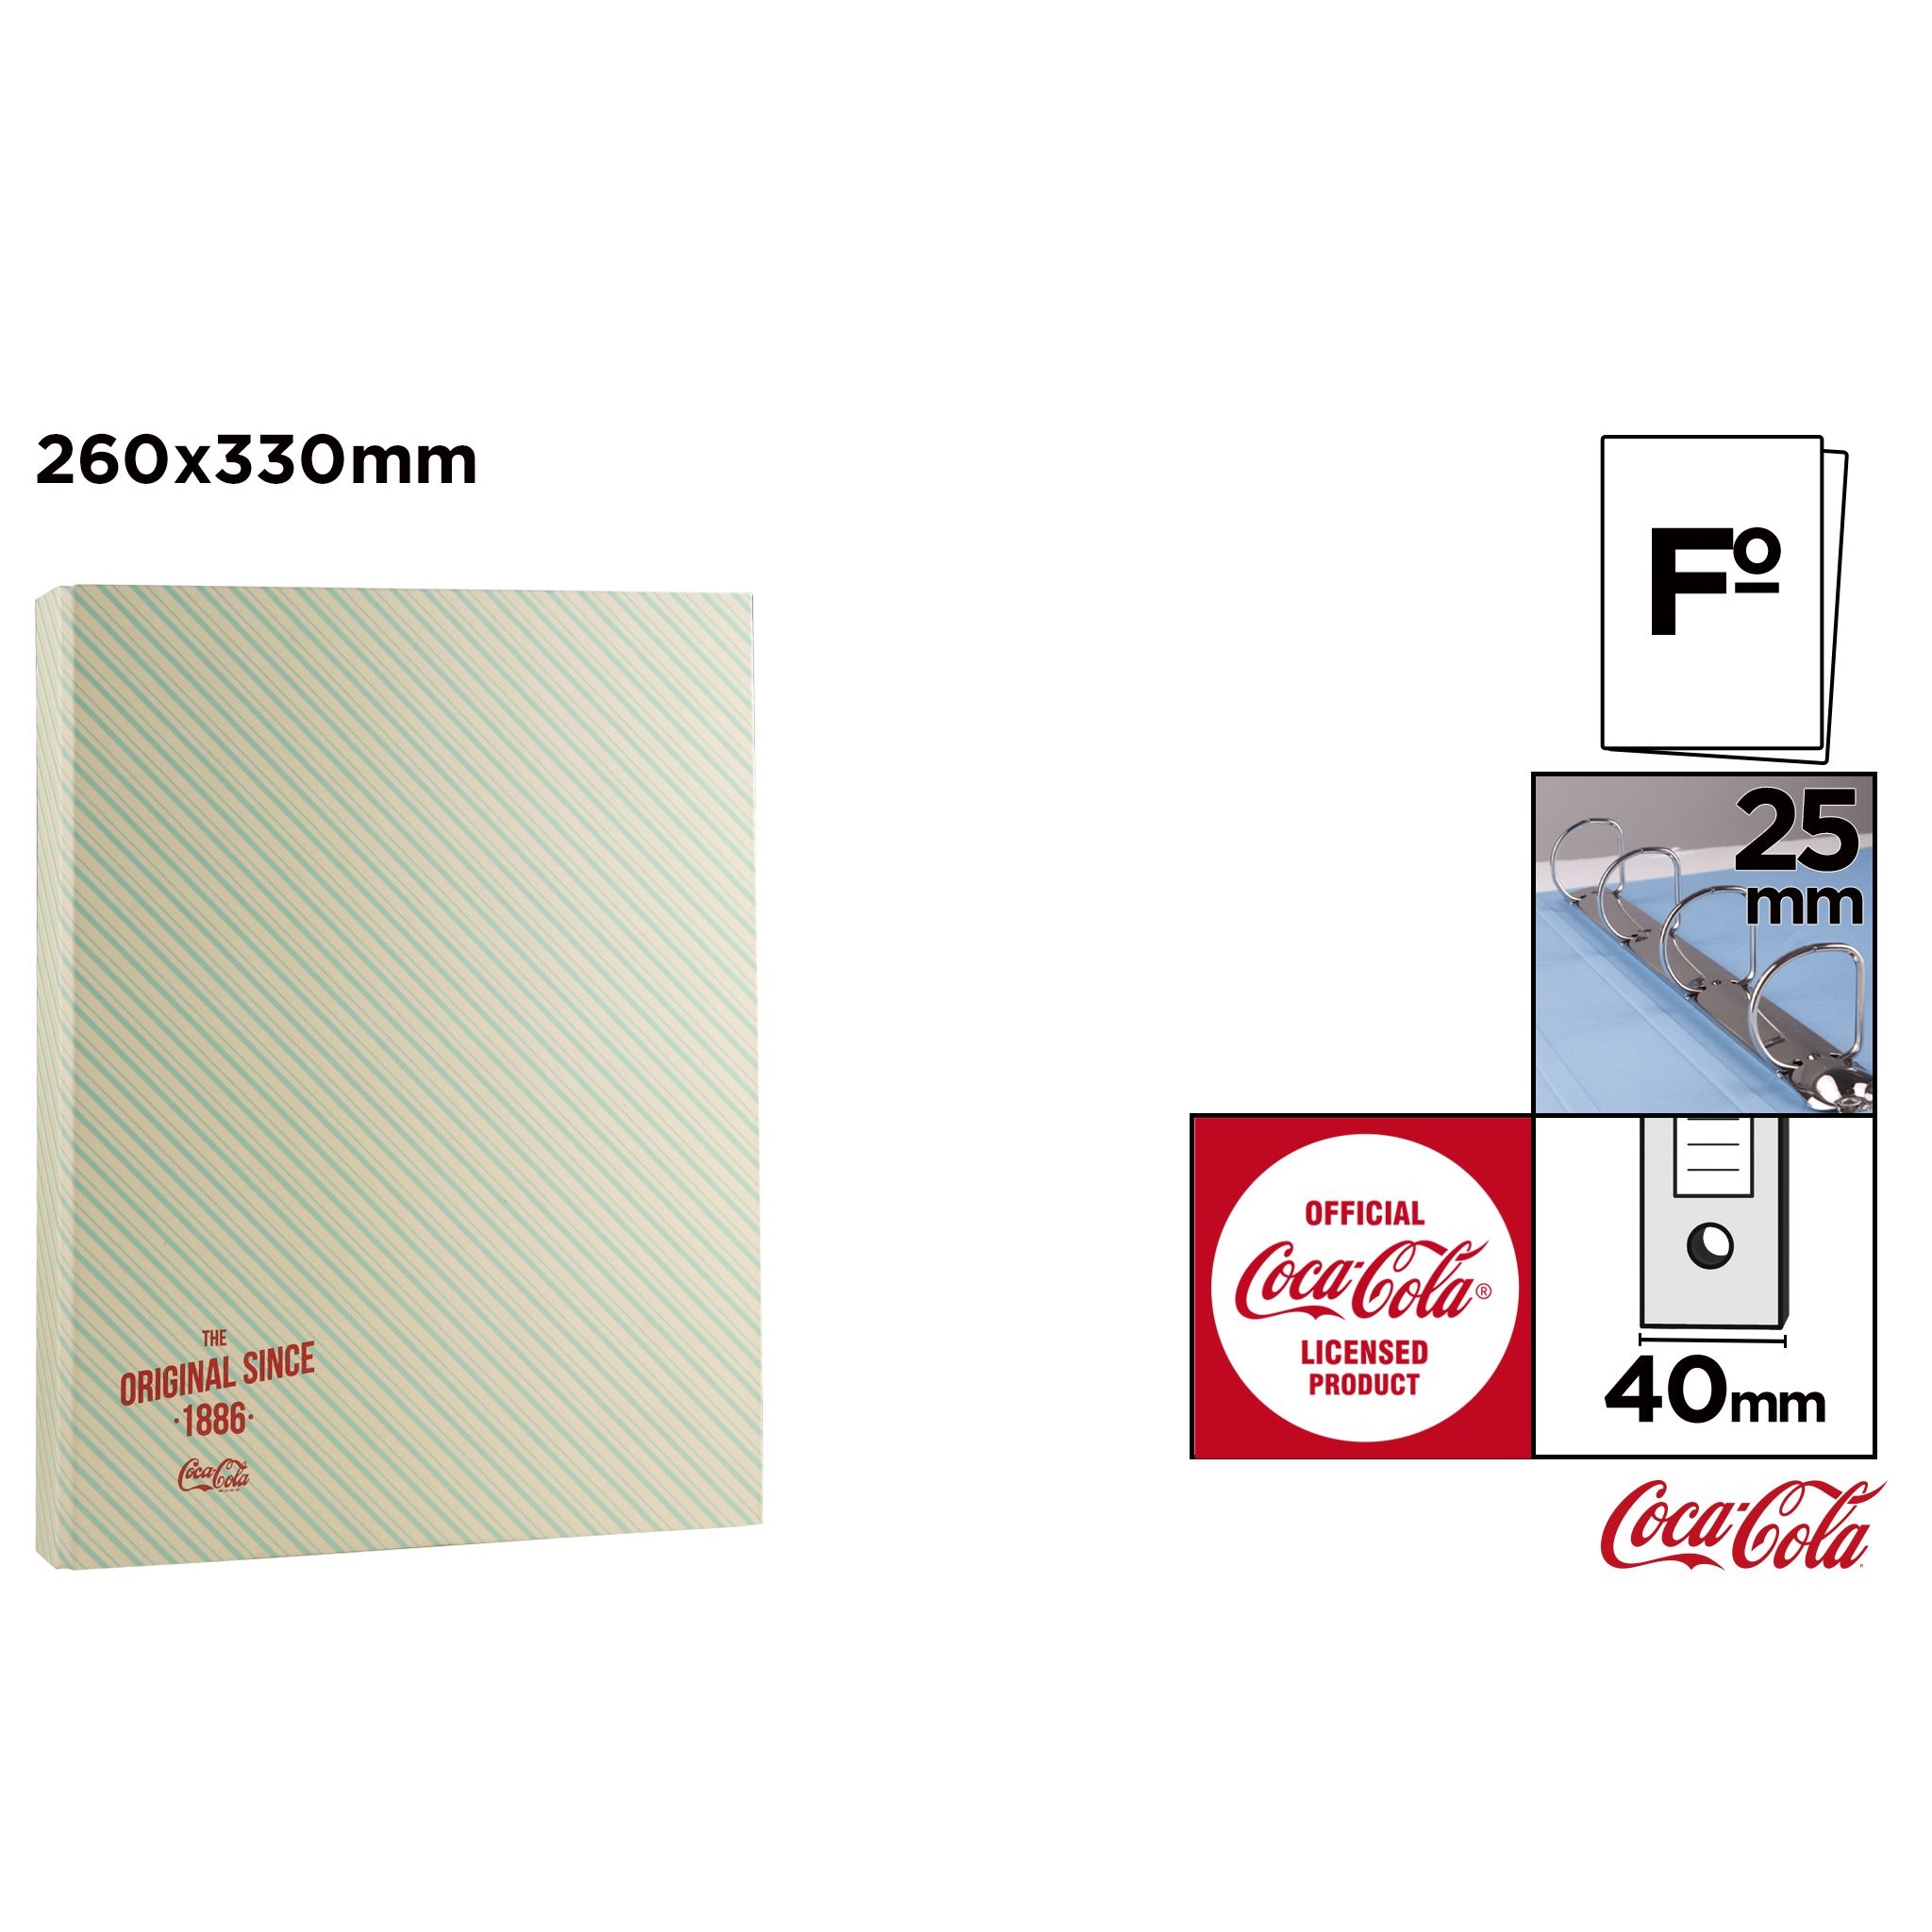 CC010 Coca-Cola Folder File Box Data Organizator